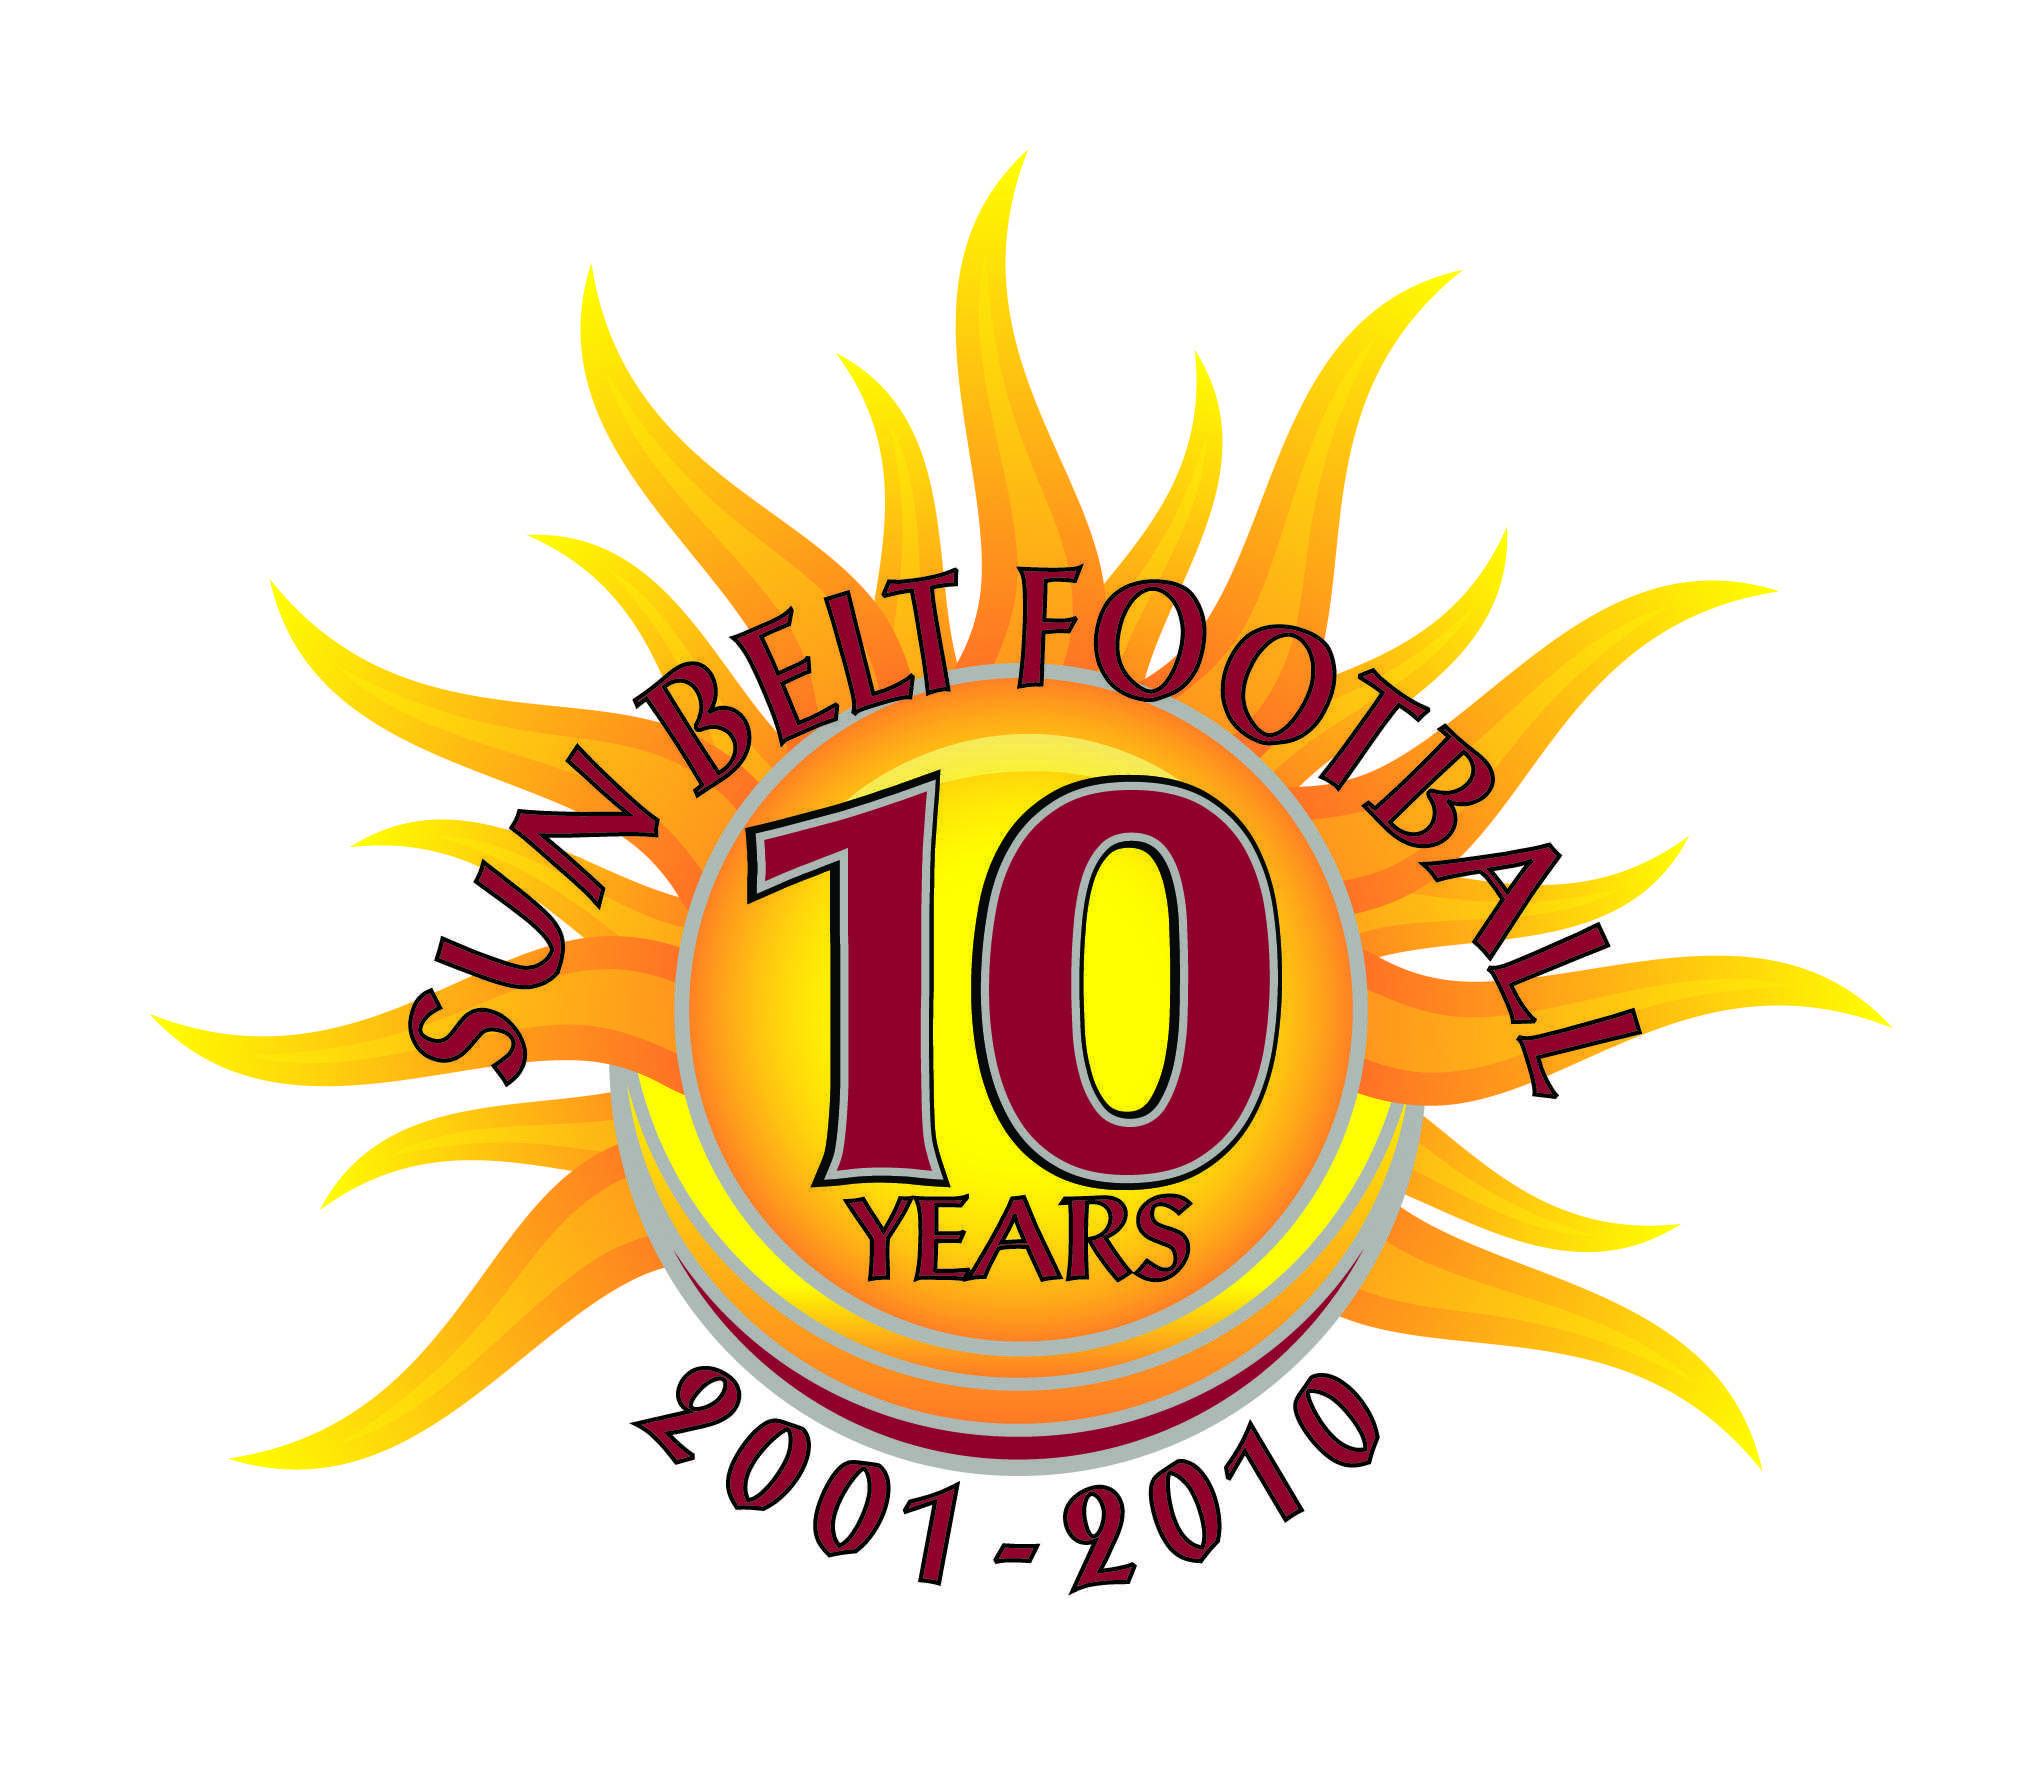 Sunbelt Logo - sunbelt logo – The Hawkeye